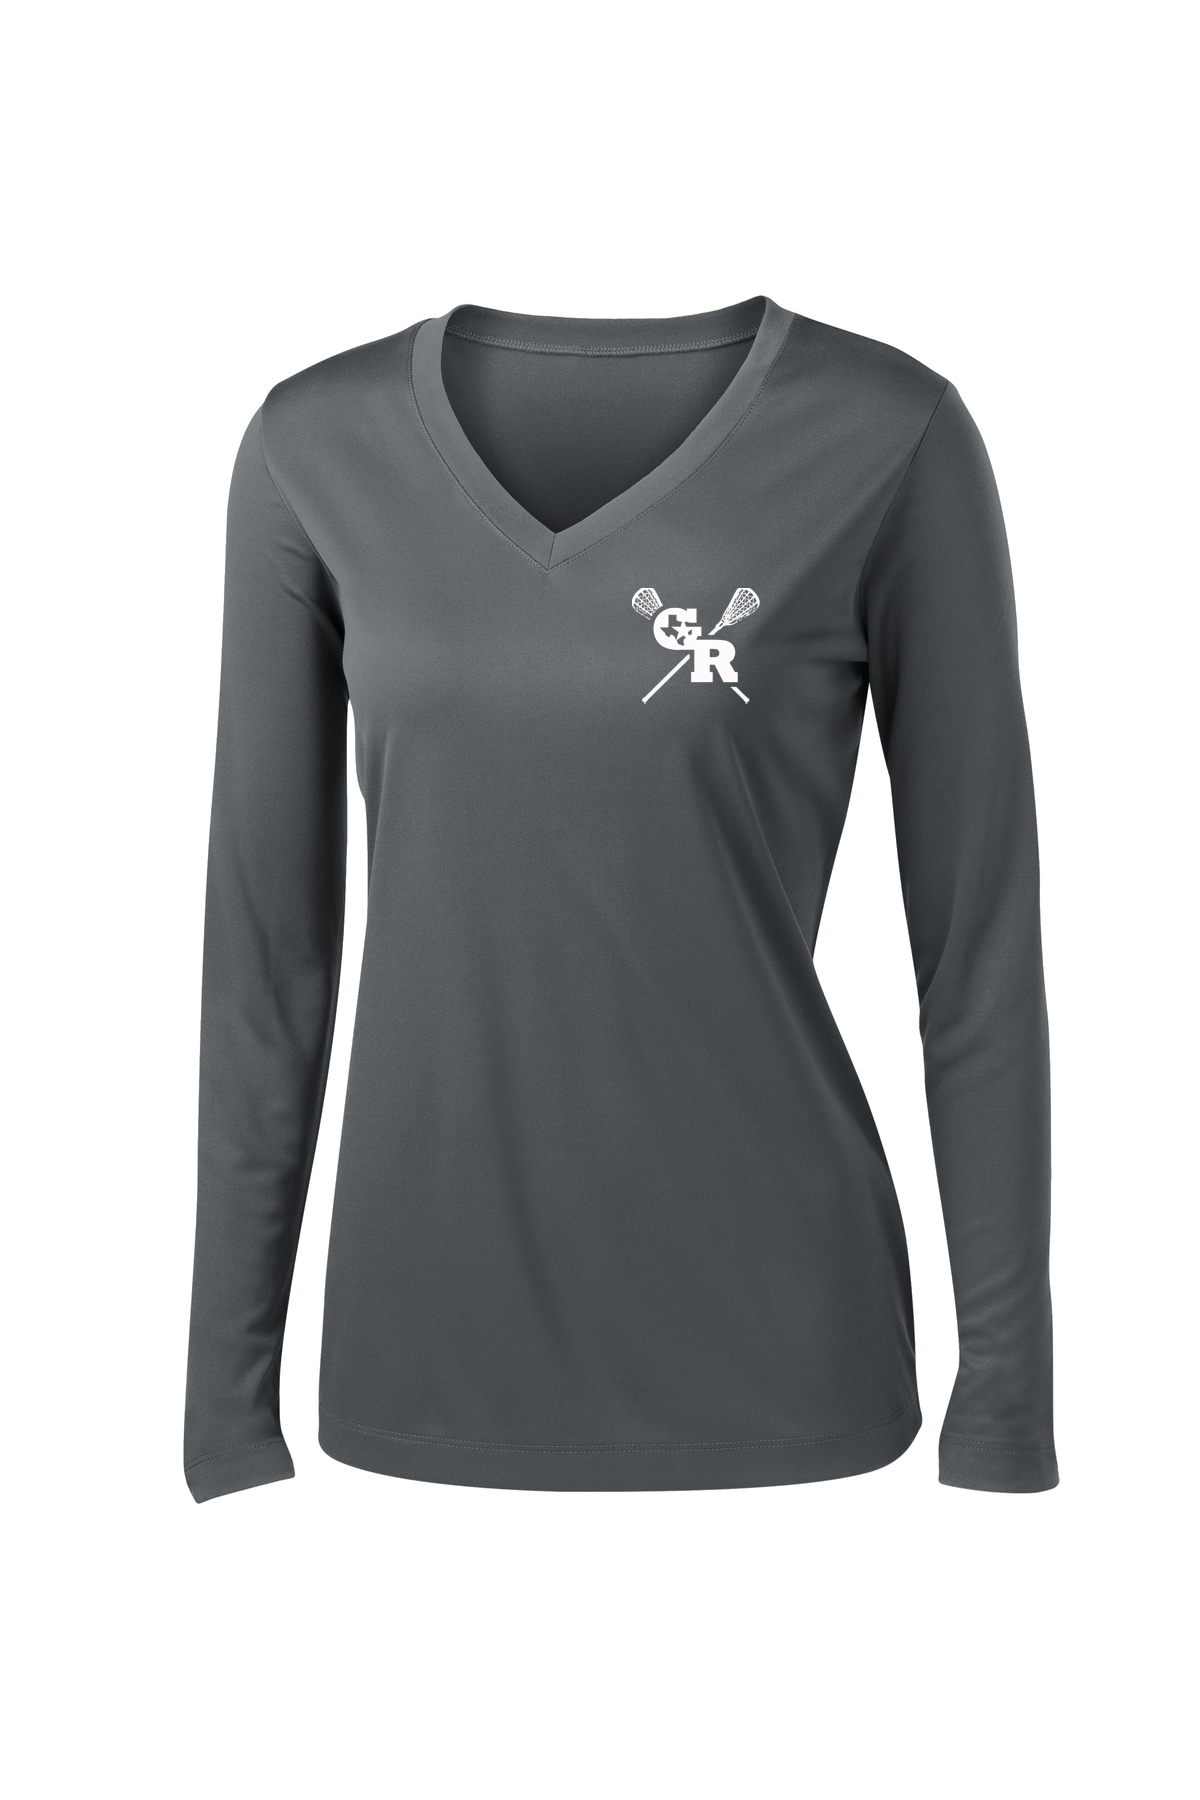 GR Longhorns Lacrosse Women's Long Sleeve Performance Shirt